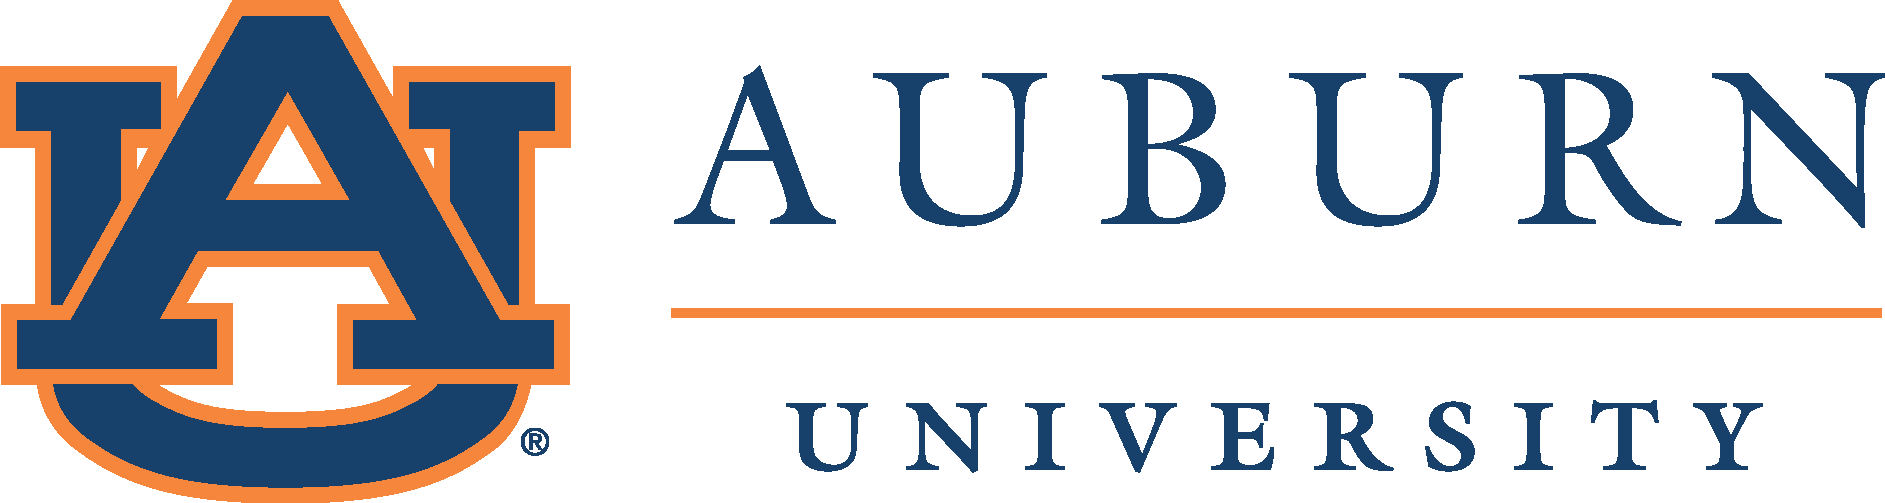 Auburn University Seal And Logos - Auburn University College Of Engineering (1885x503)